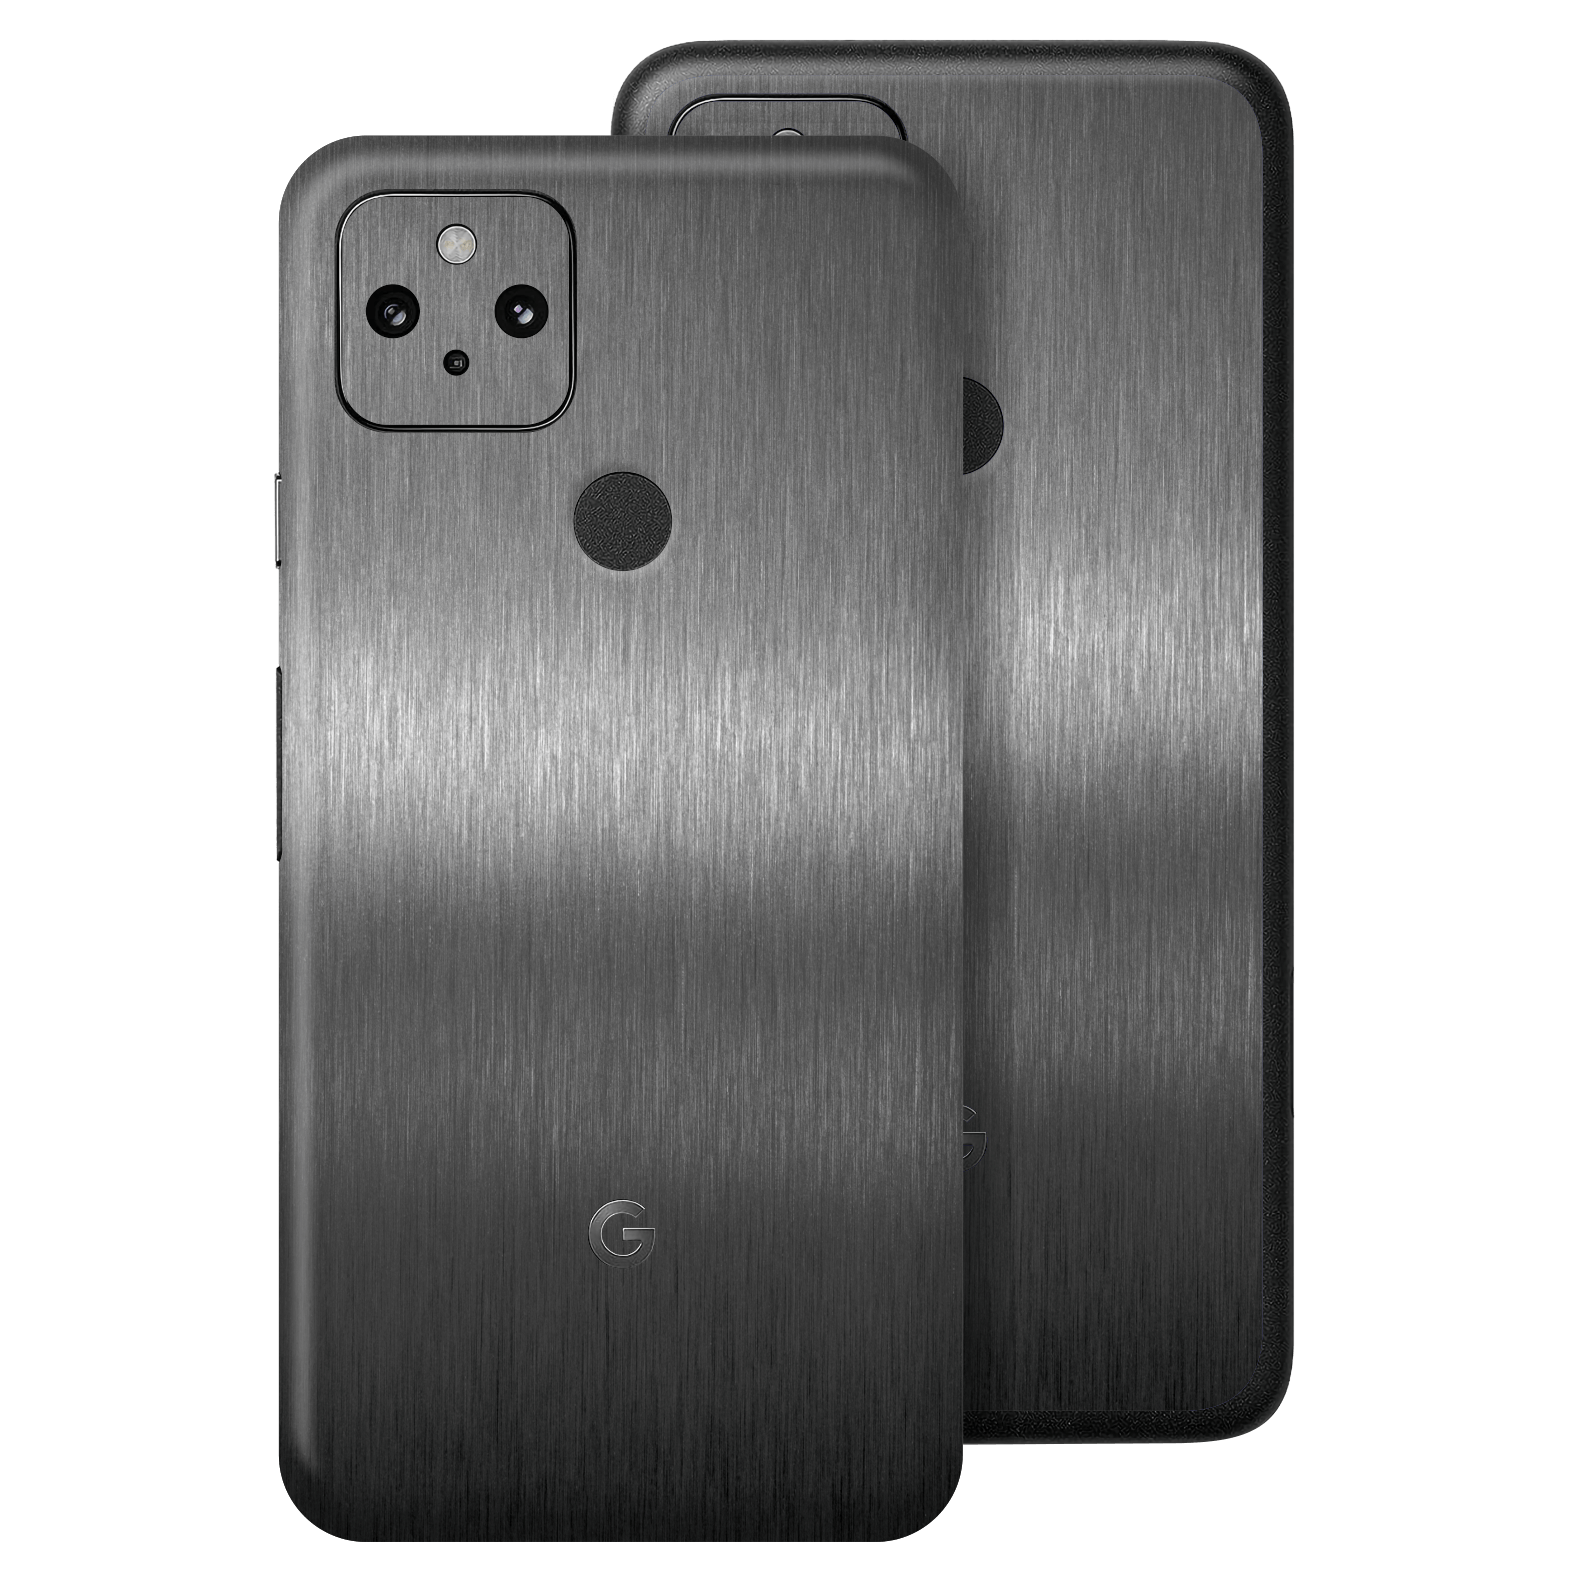 Google Pixel 4a 5G  Brushed Metal Titanium Metallic Skin Wrap Sticker Decal Cover Protector by EasySkinz | EasySkinz.com